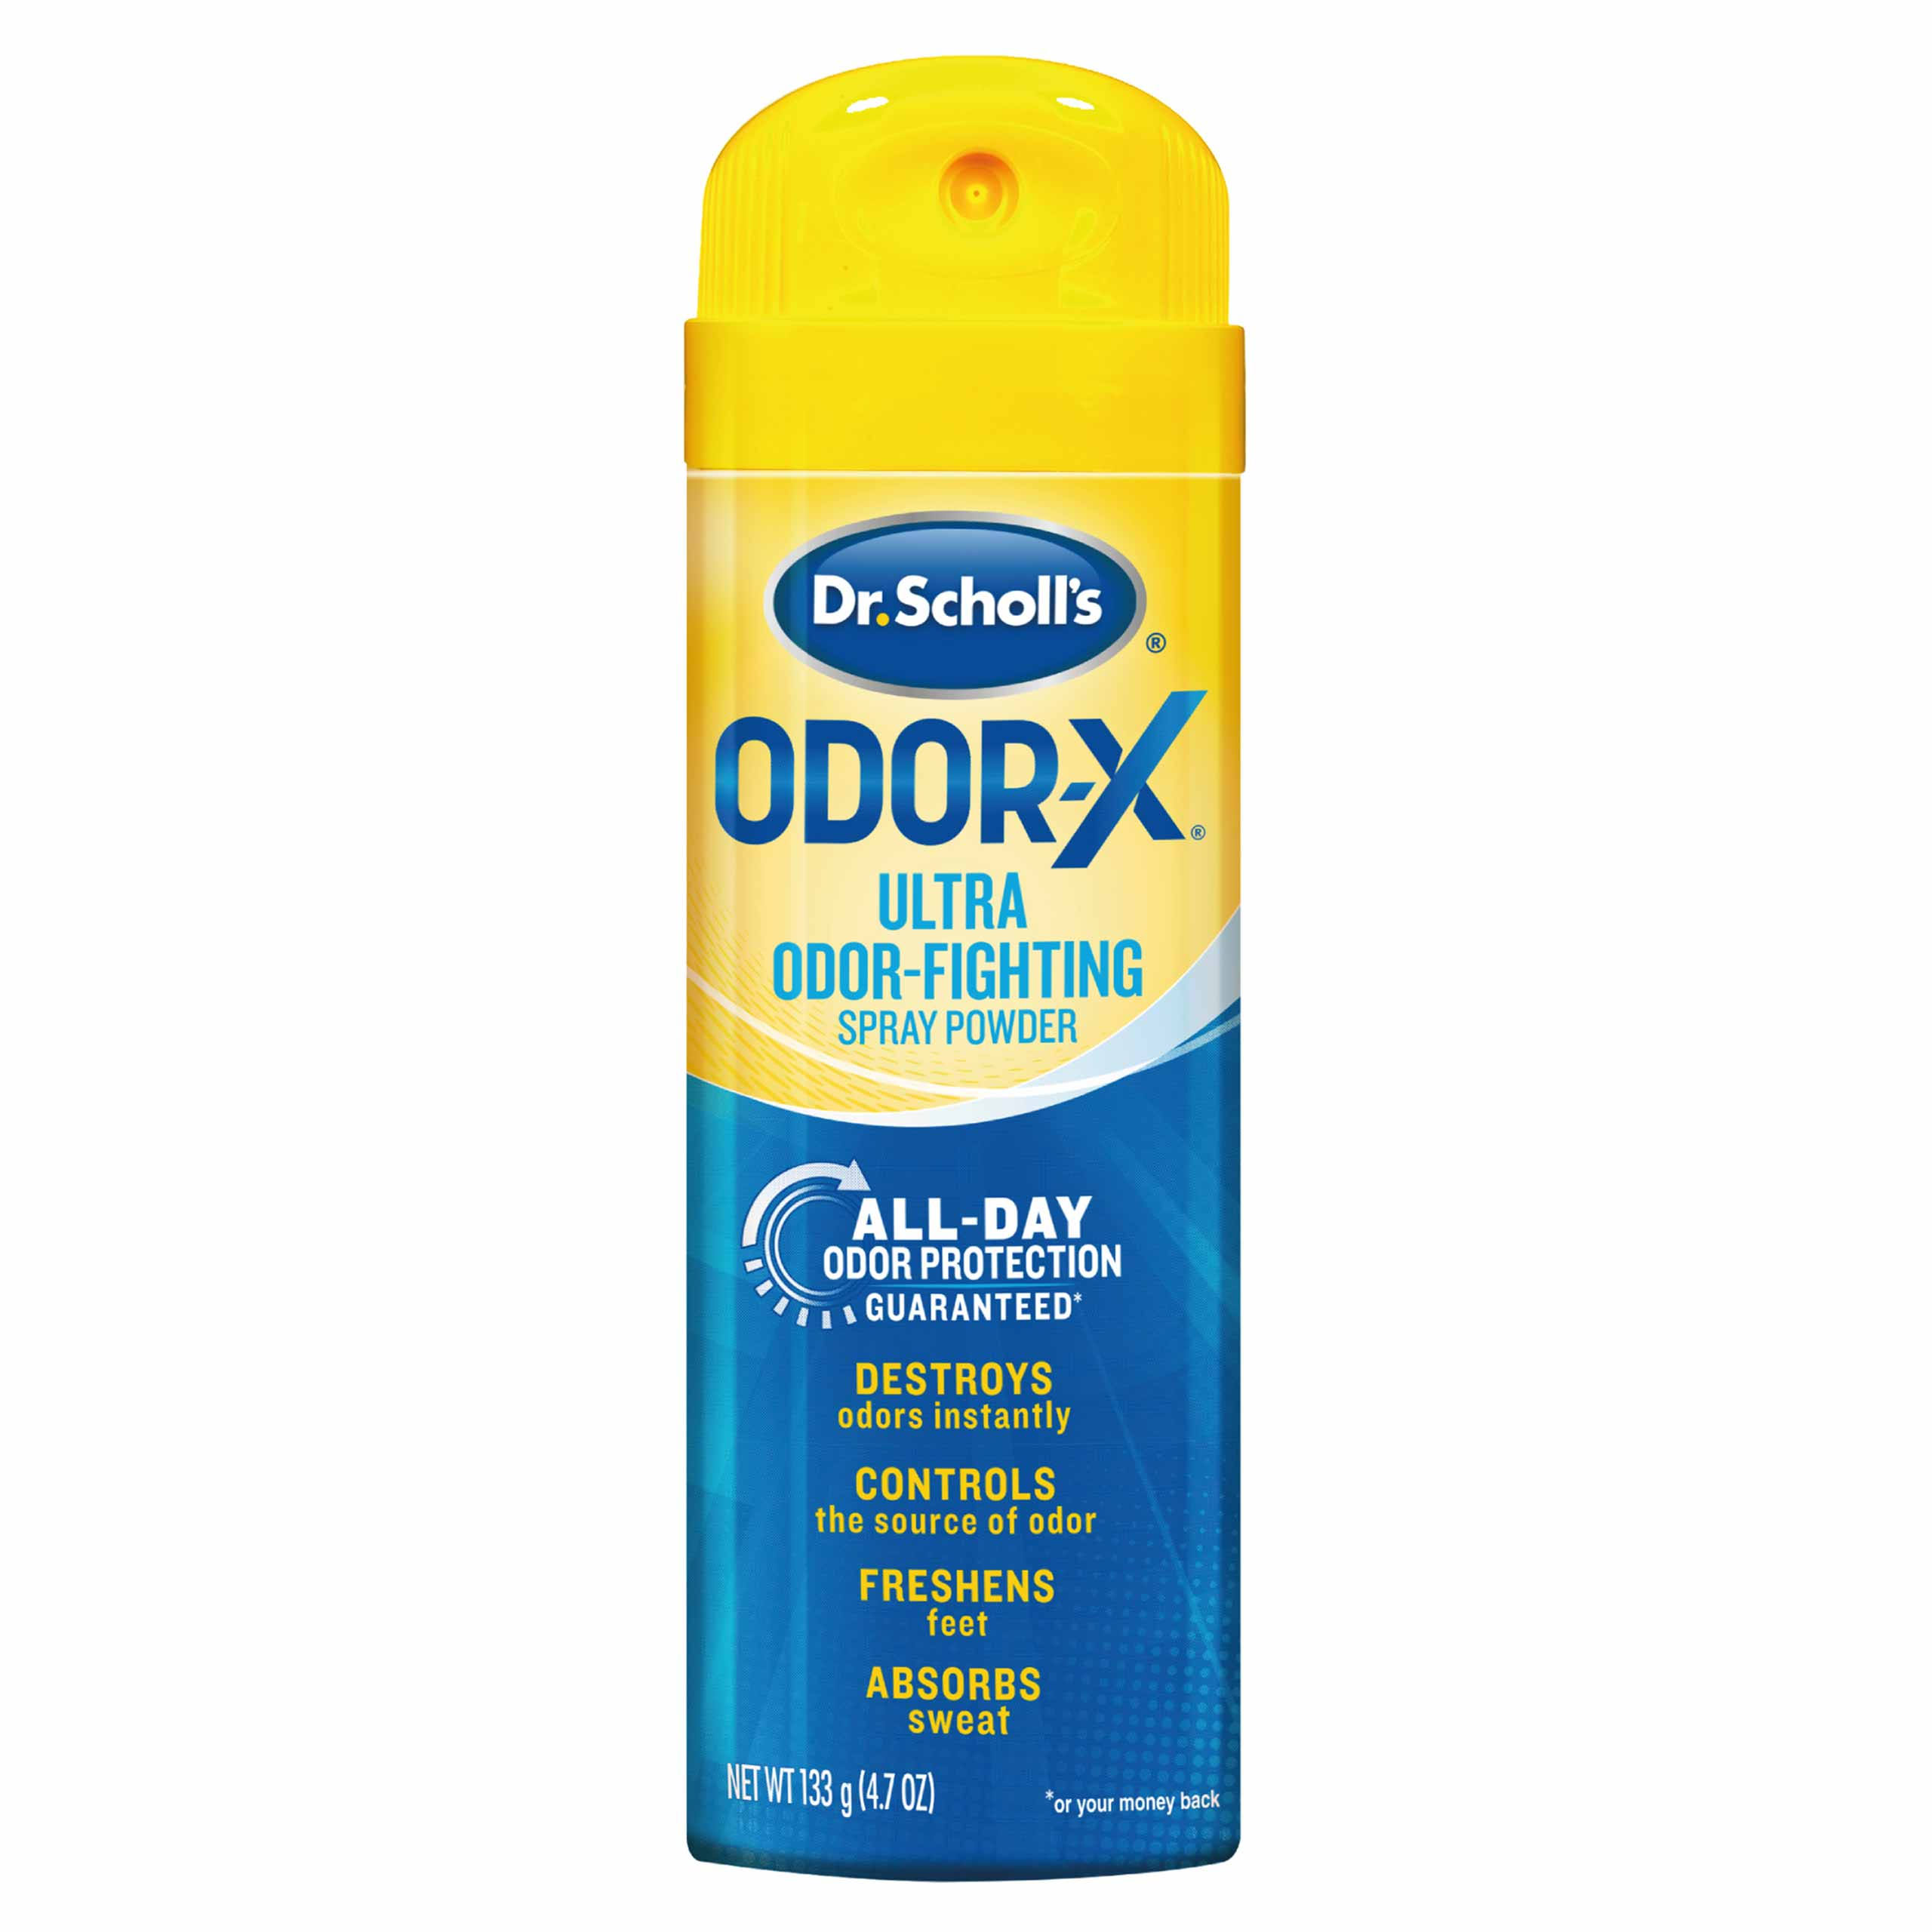 Dr. Scholl’s Odor-X Odor-Fighting Spray Powder, 4.7 oz